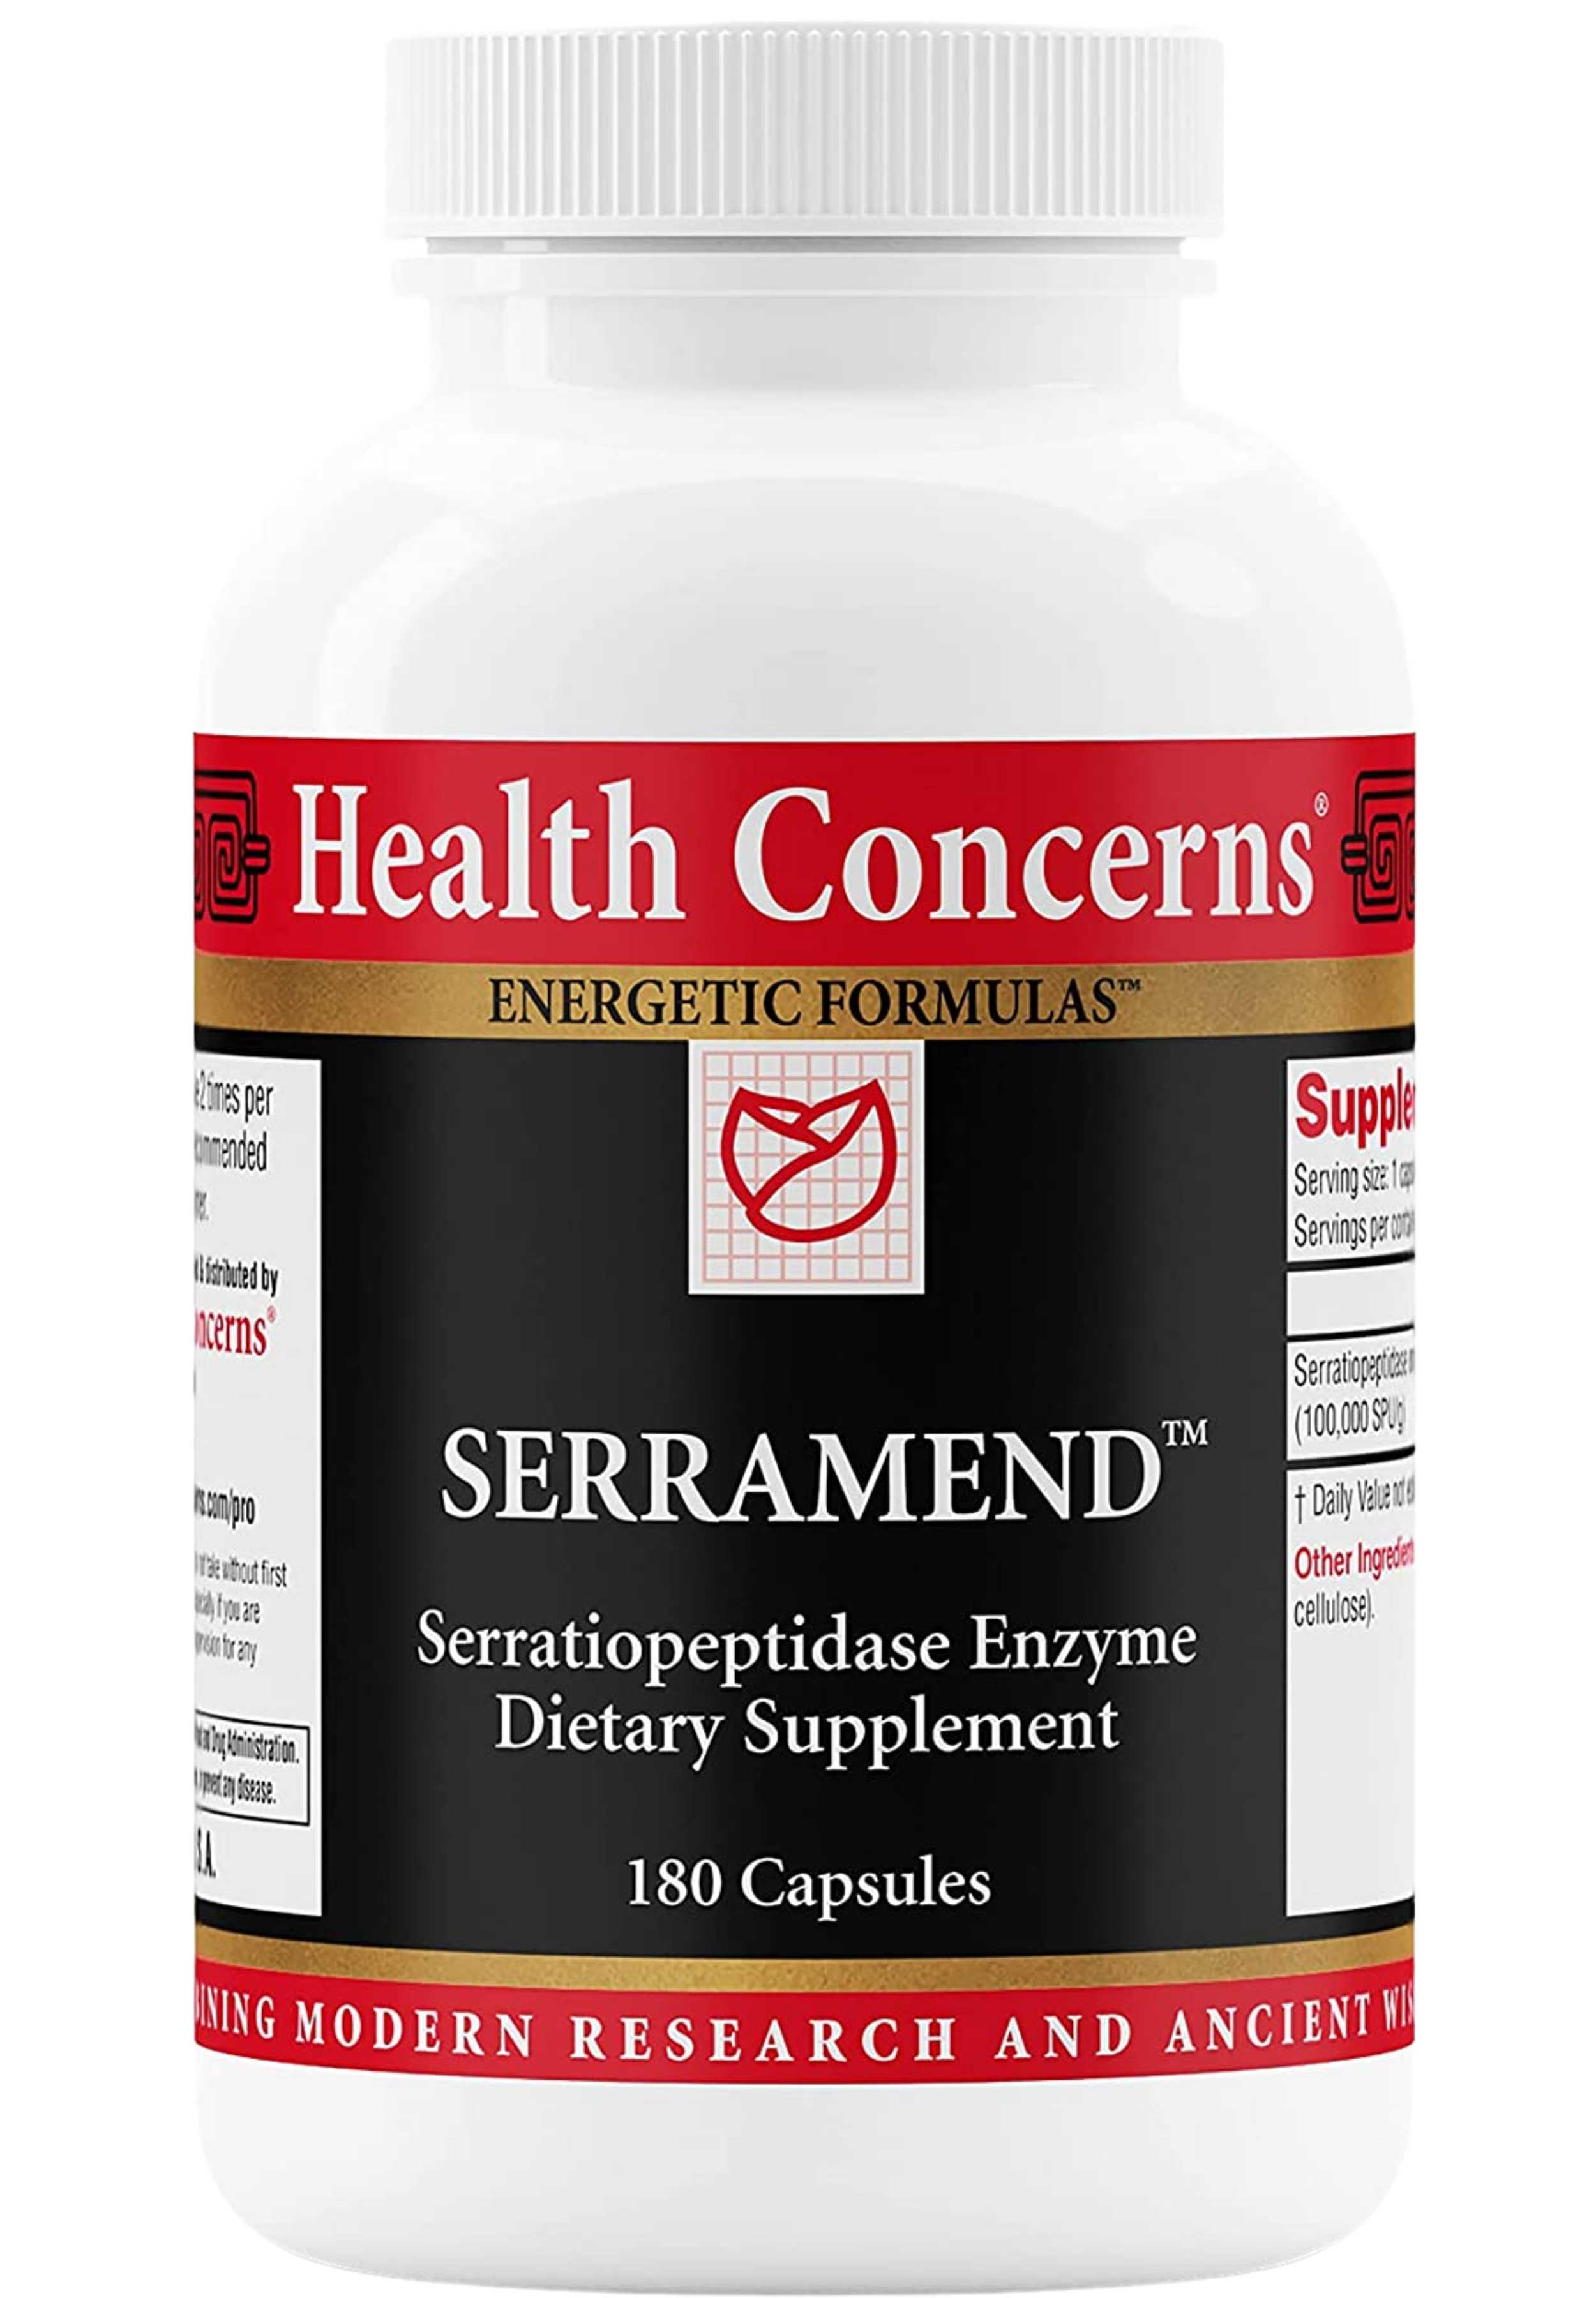 Health Concerns Serramend